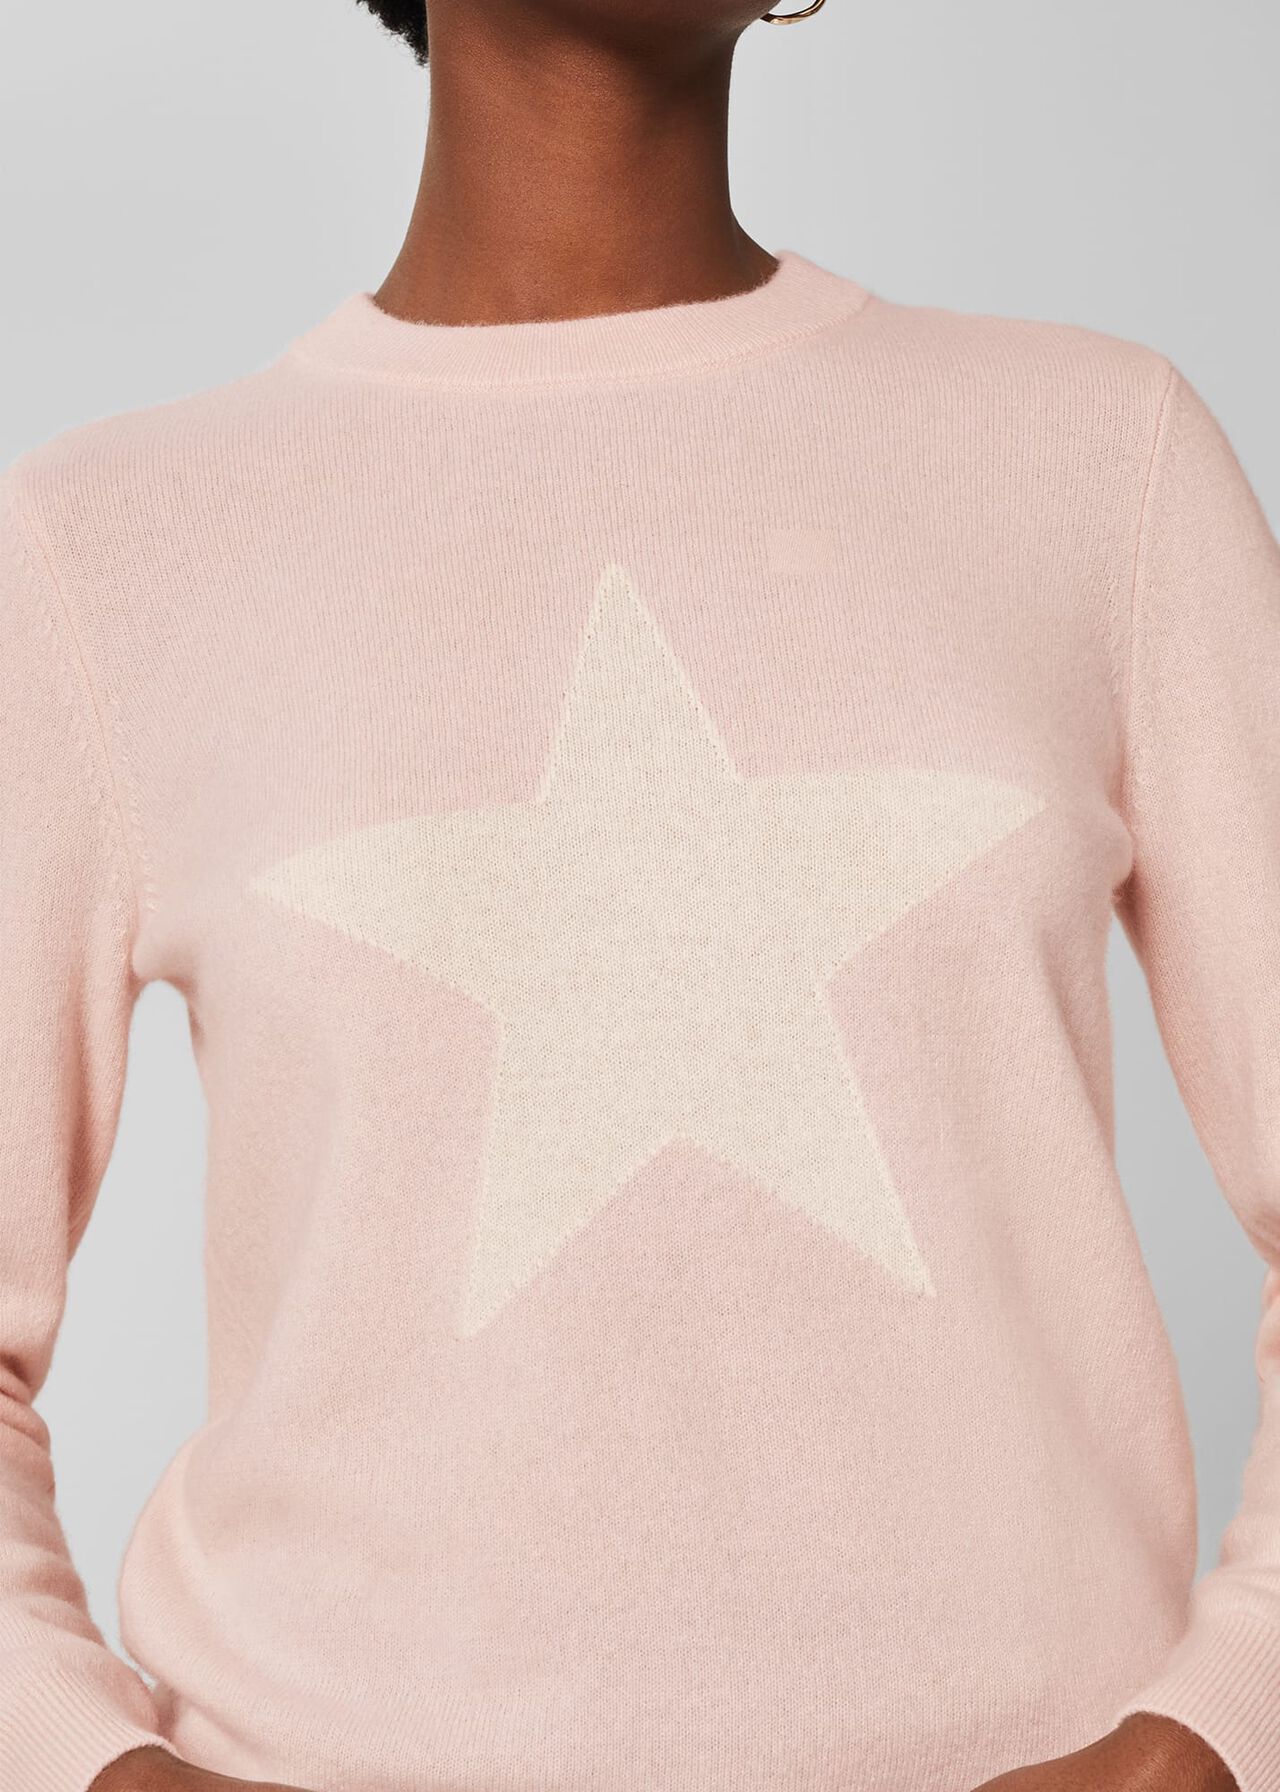 Cashmere Trudy Star Jumper, Pale Pink Ivory, hi-res